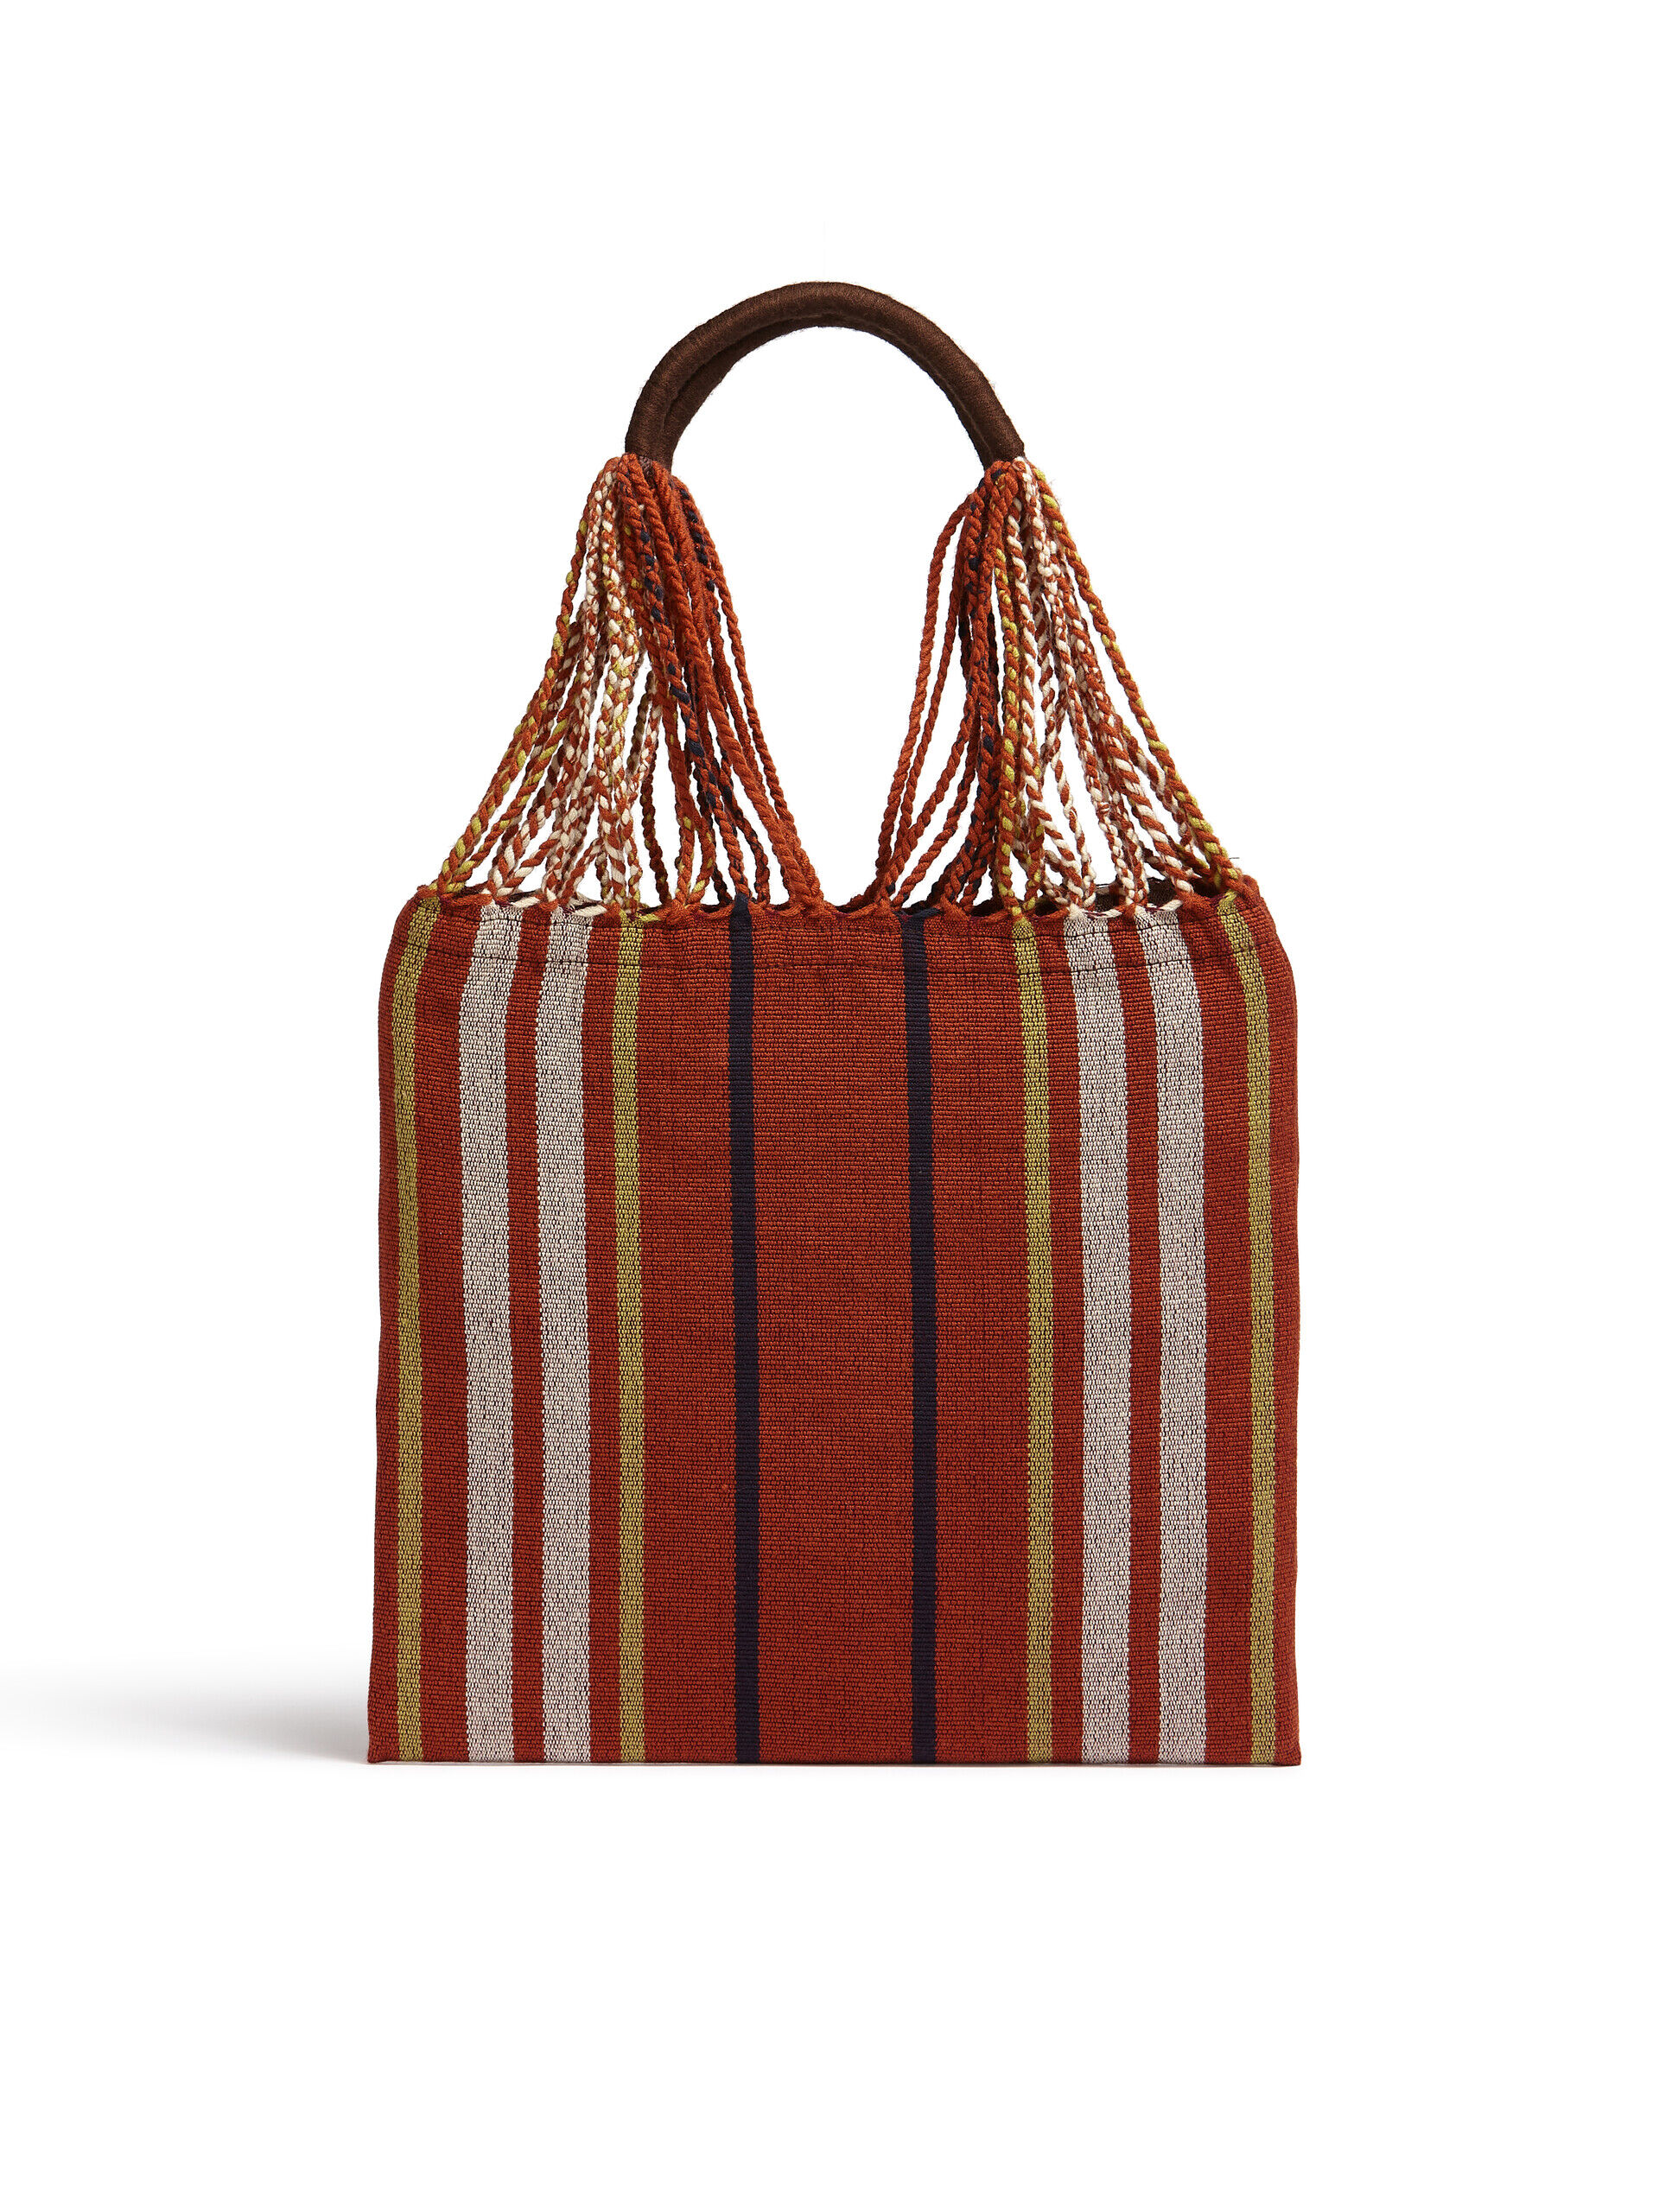 MARNI MARKET HAMMOCK bag in multicolor brown crochet | Marni